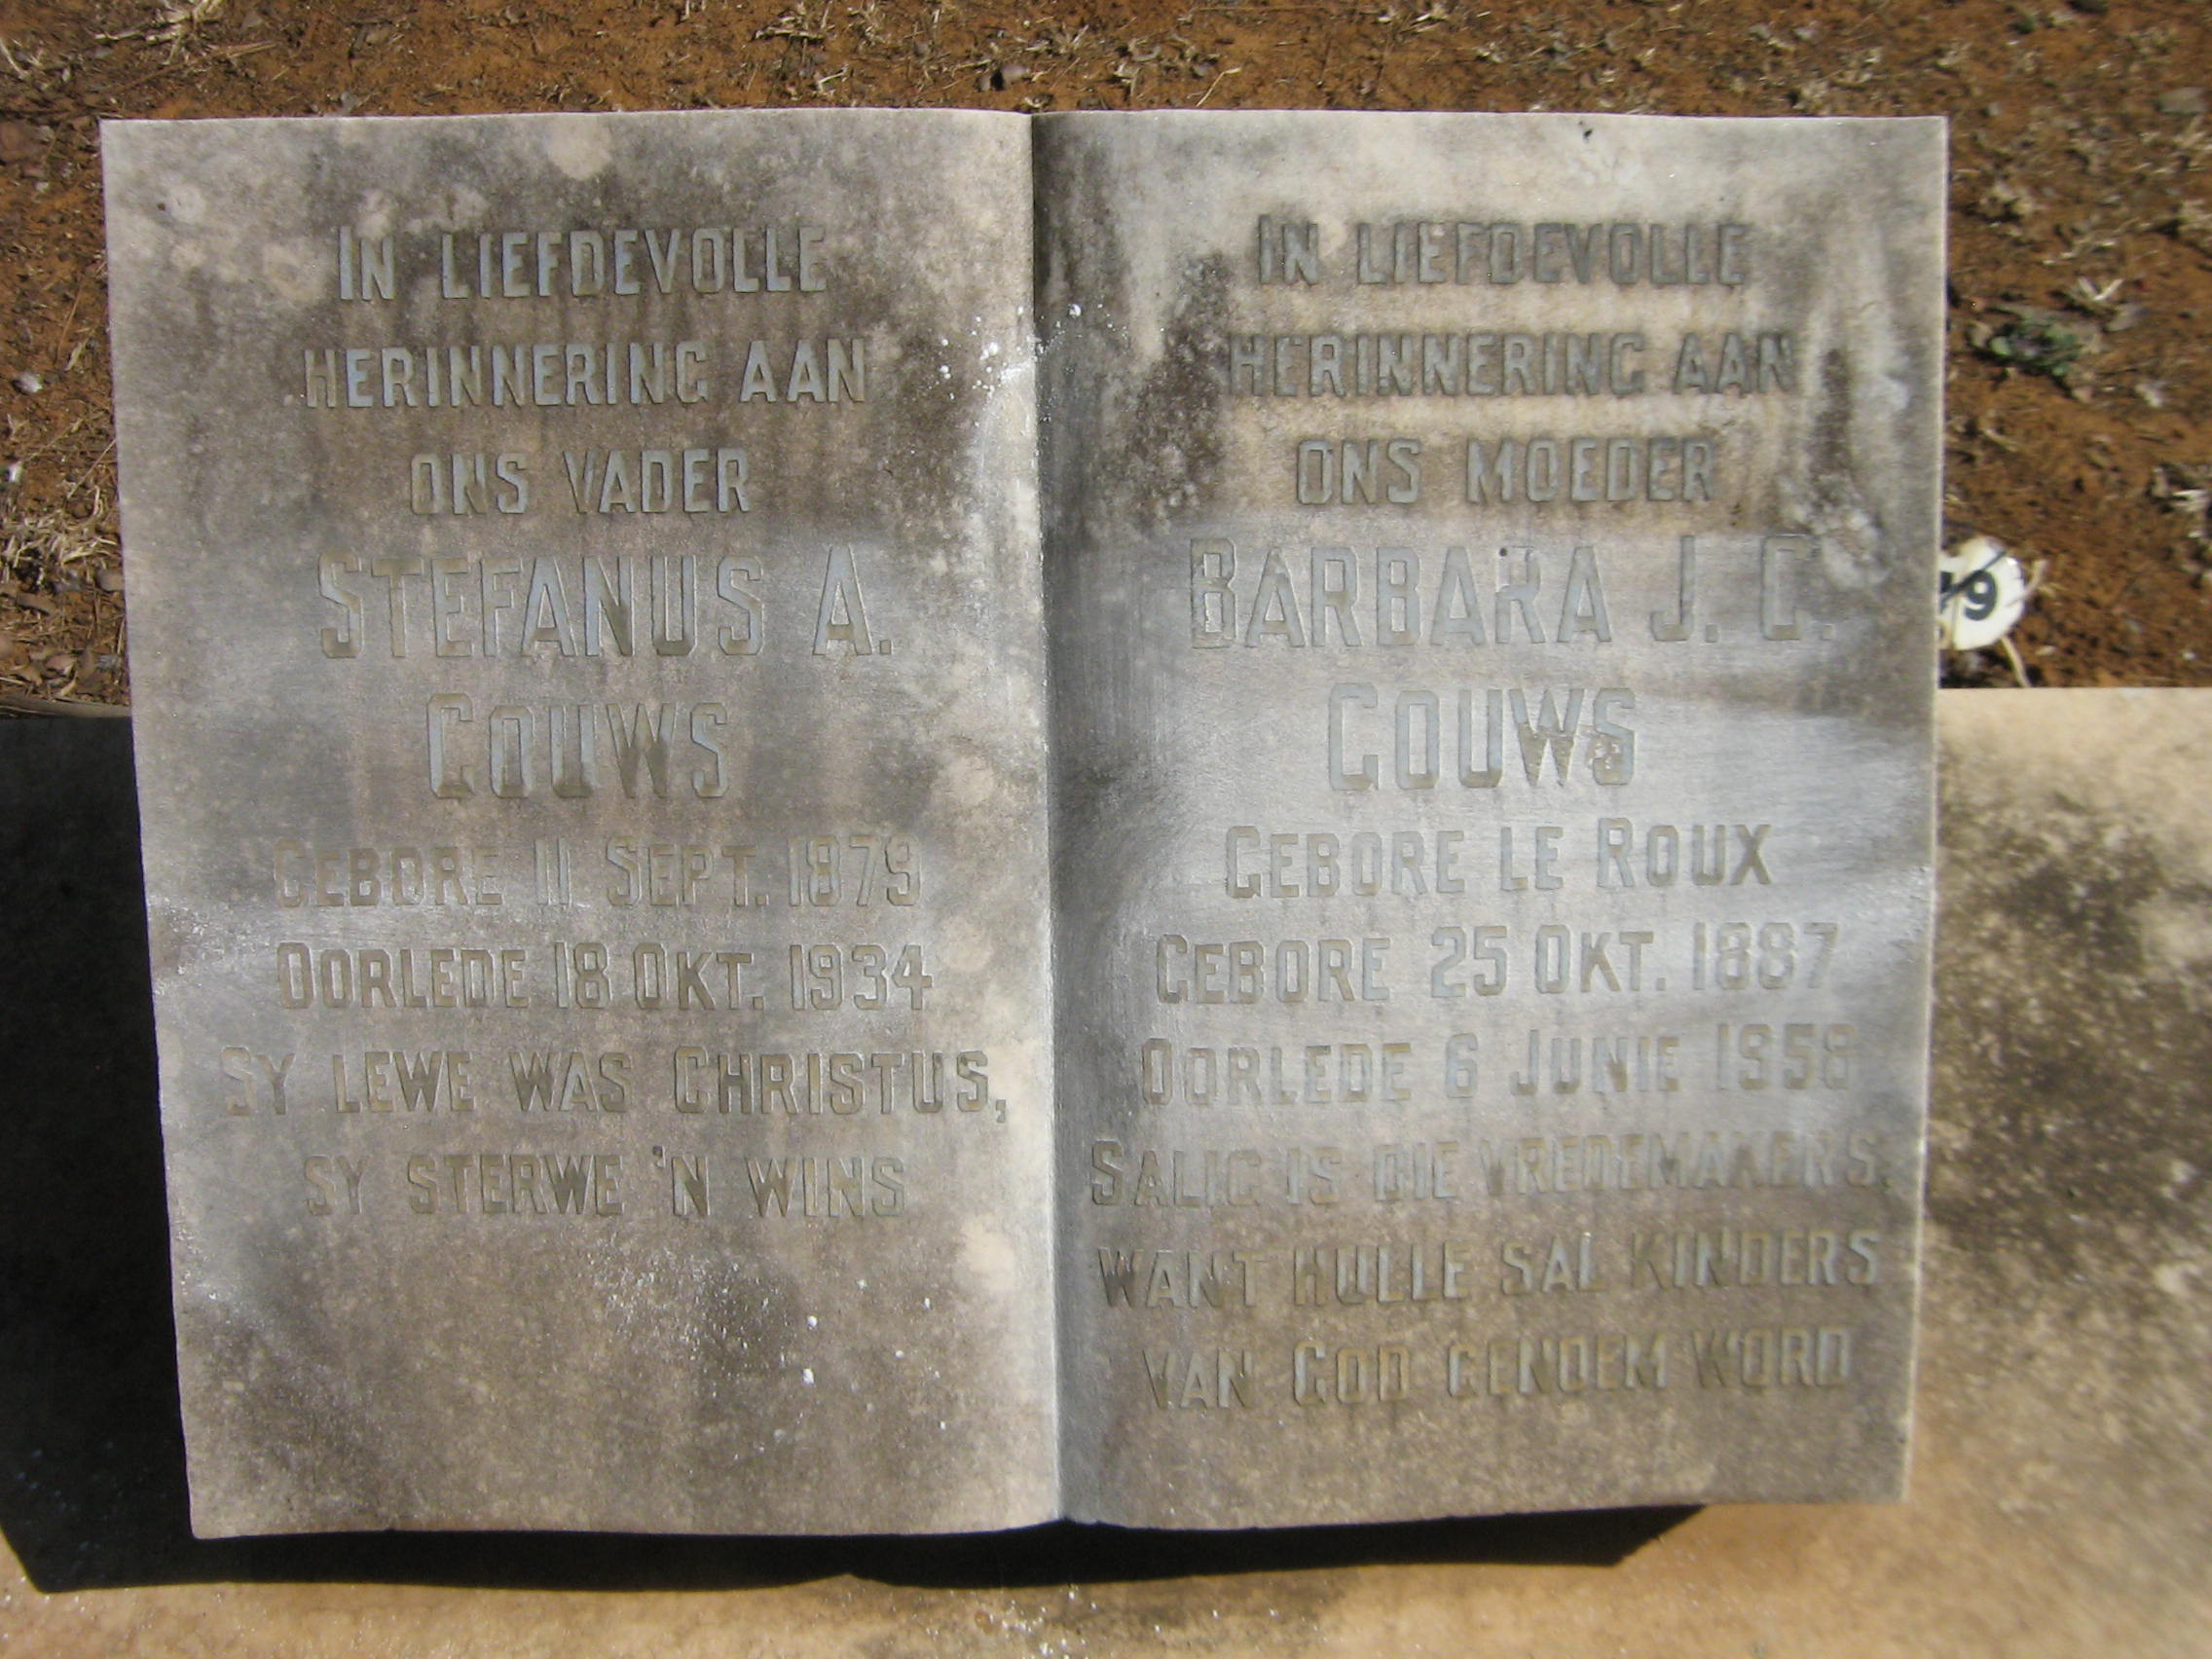 GOUWS Stefanus A. 1879-1934 & Barbara J.C. LE ROUX 1887-1956